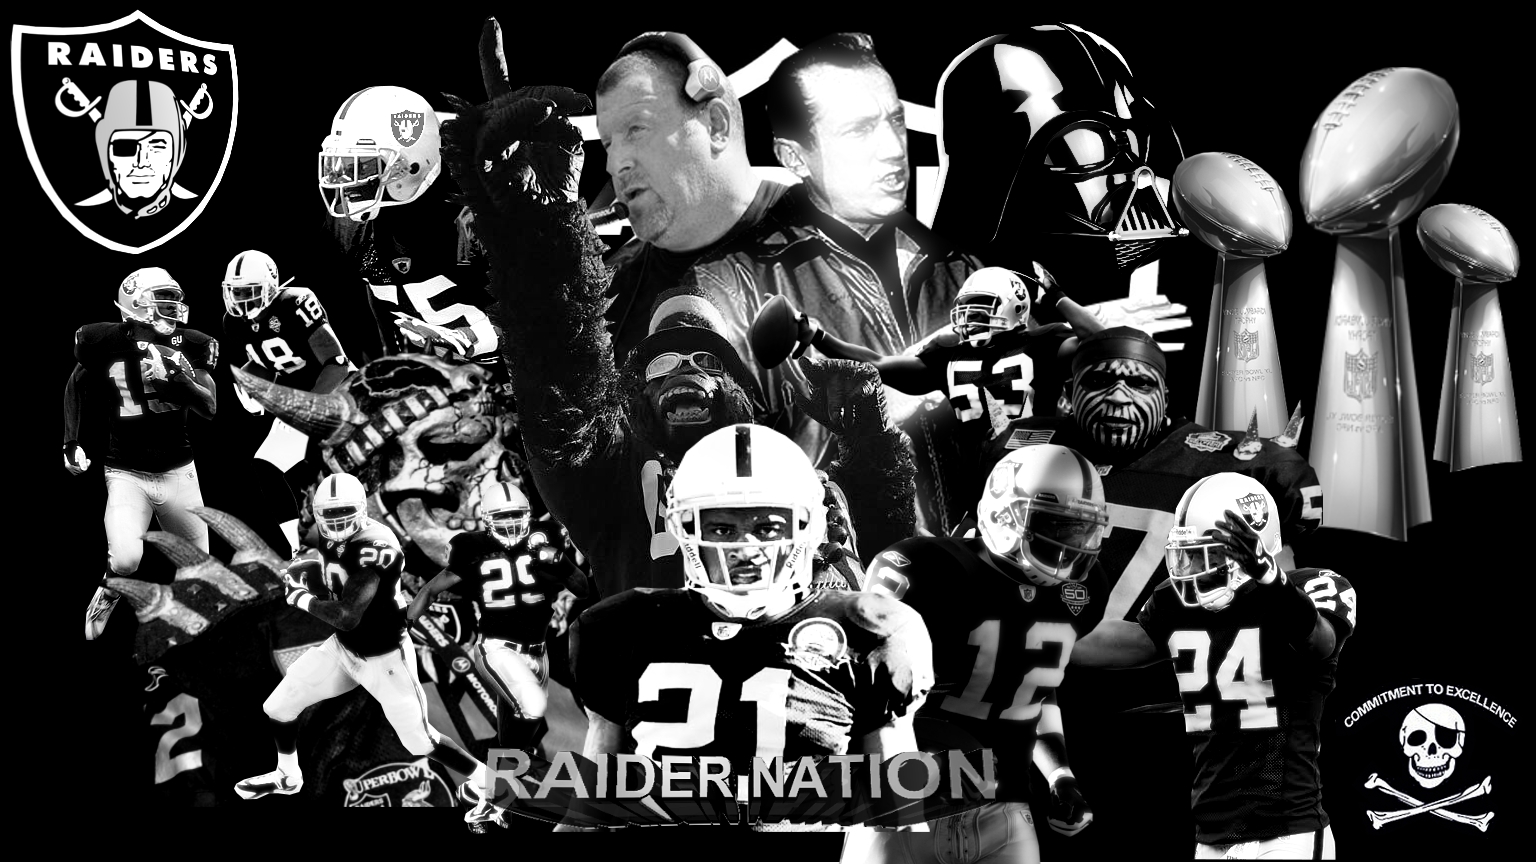 Oakland Raiders Wallpaper 4813 1536x864 px ~ WallpaperFort.com